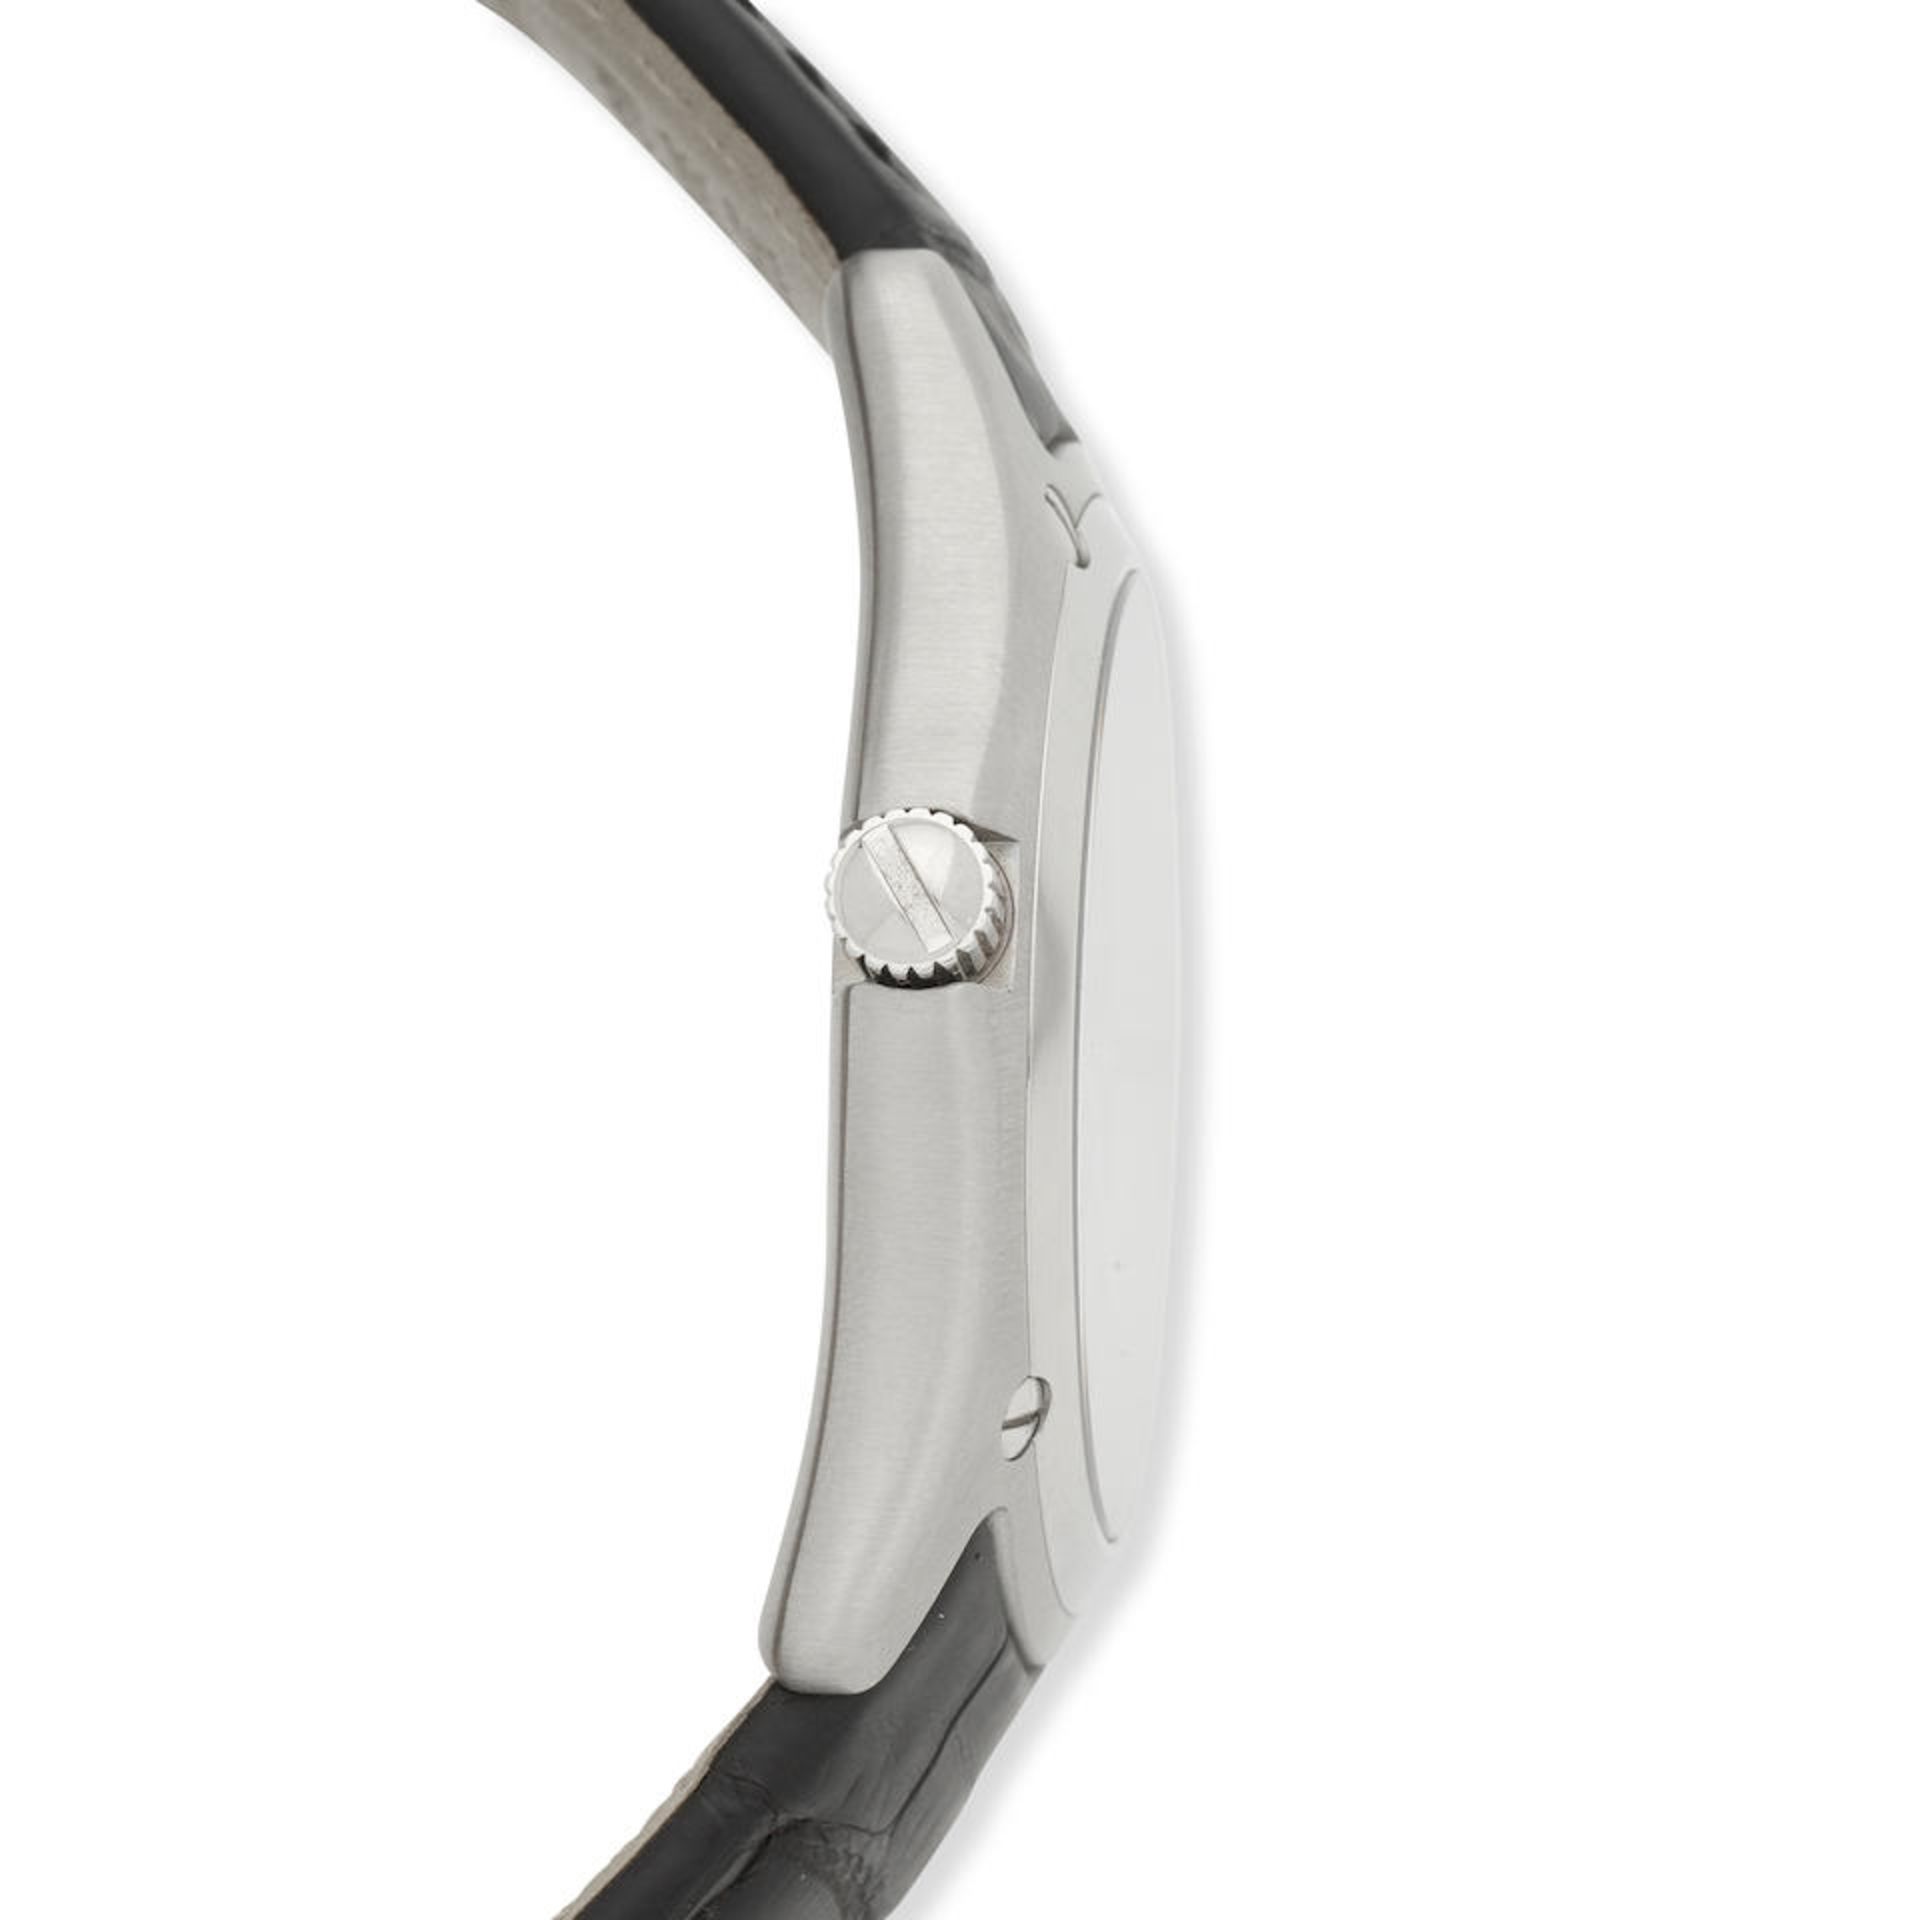 Ebel. A stainless steel quartz calendar wristwatch Ref: 9255F41, Circa 2008 - Image 3 of 4